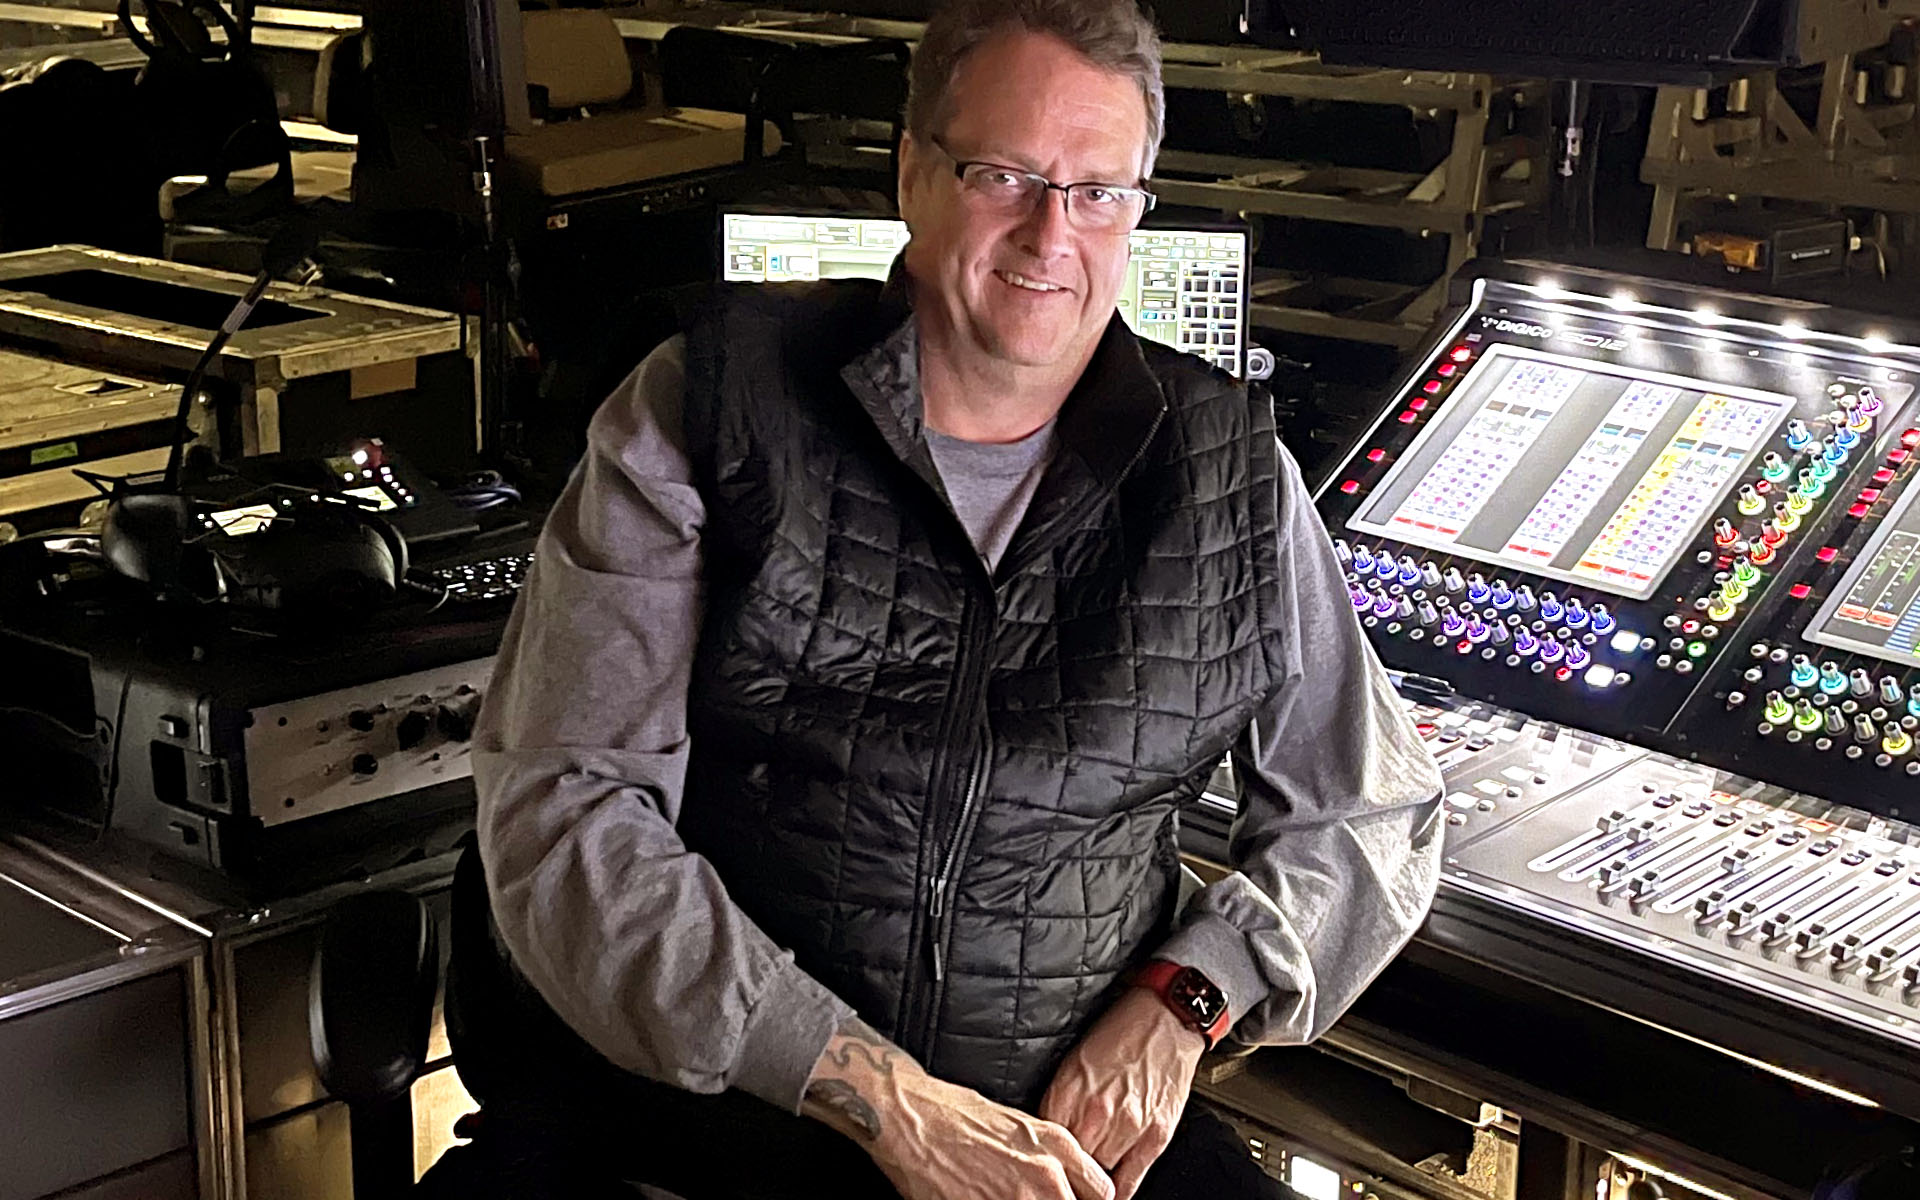 Live sound engineer Ken “Pooch” Van Druten is pictured sitting behind a mixing console.